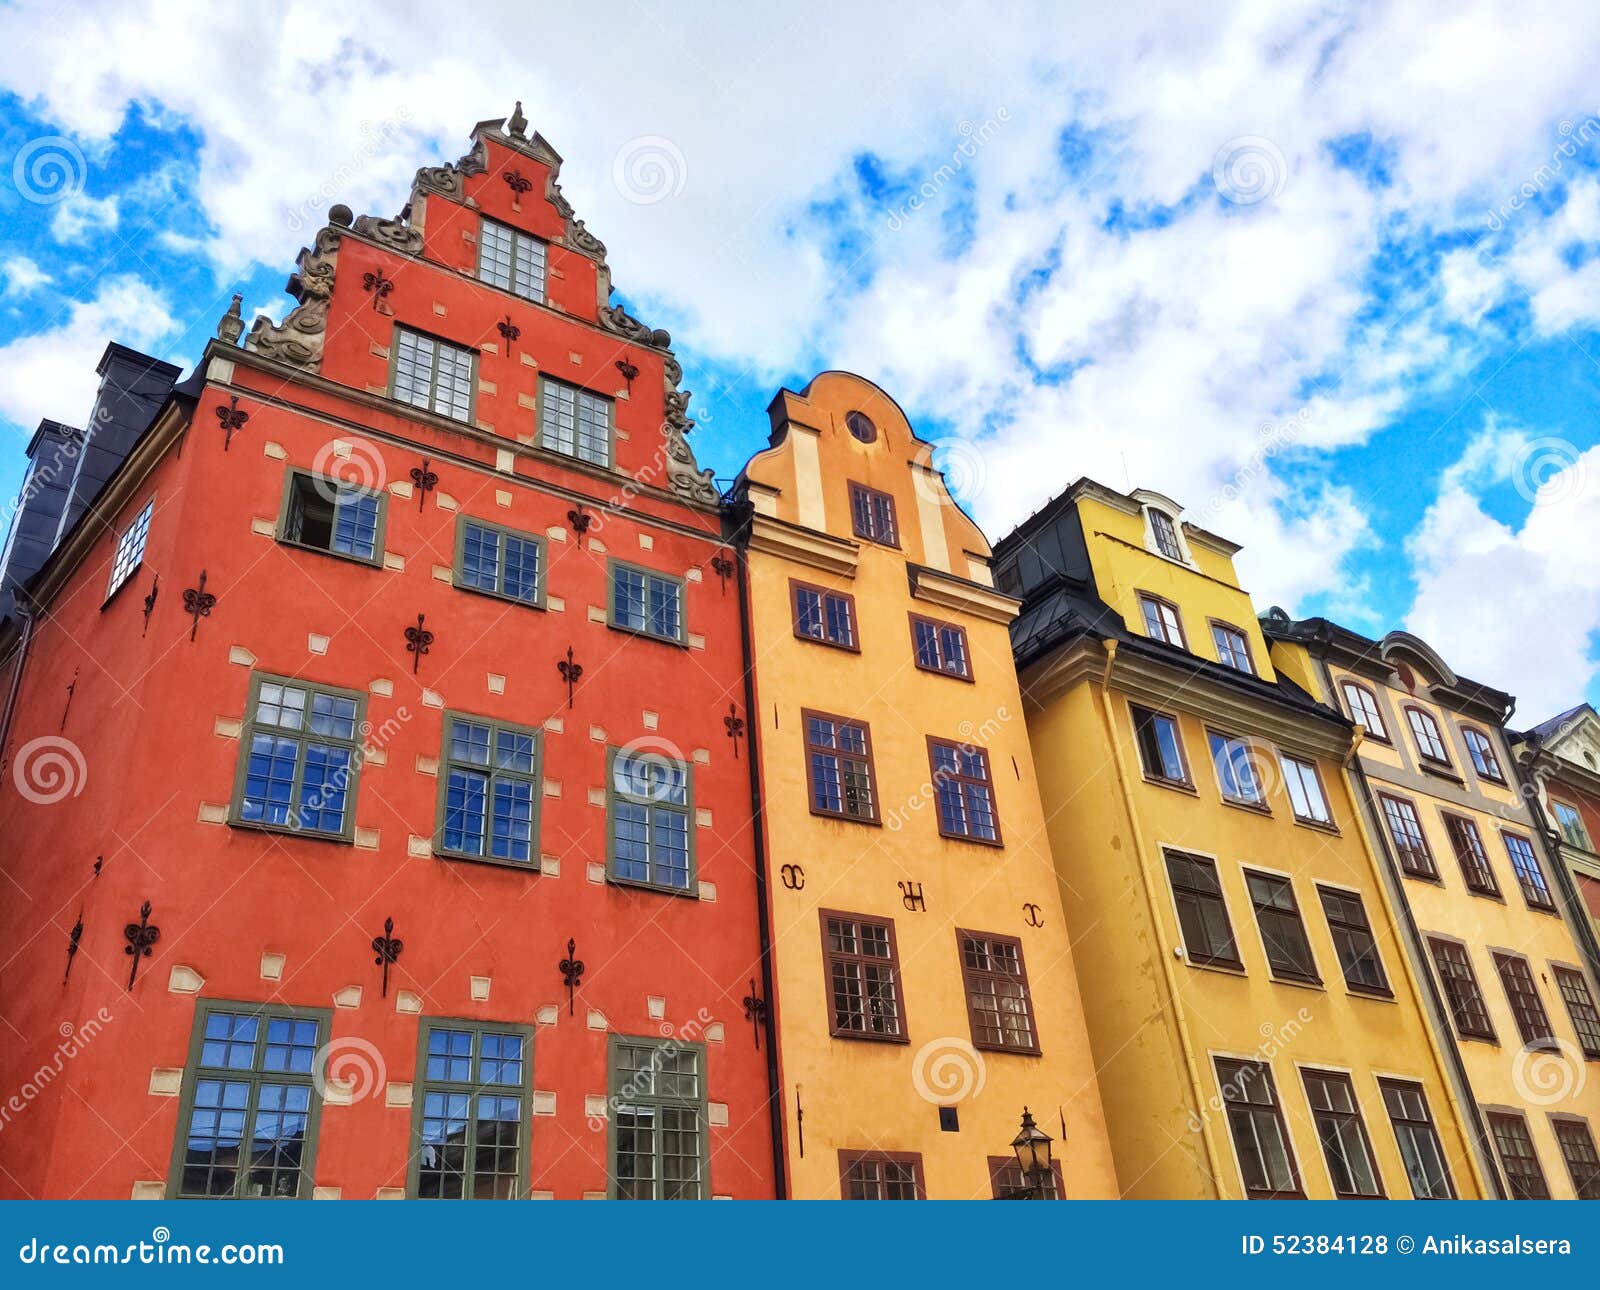 colorful buildings in gamla stan, stockholm